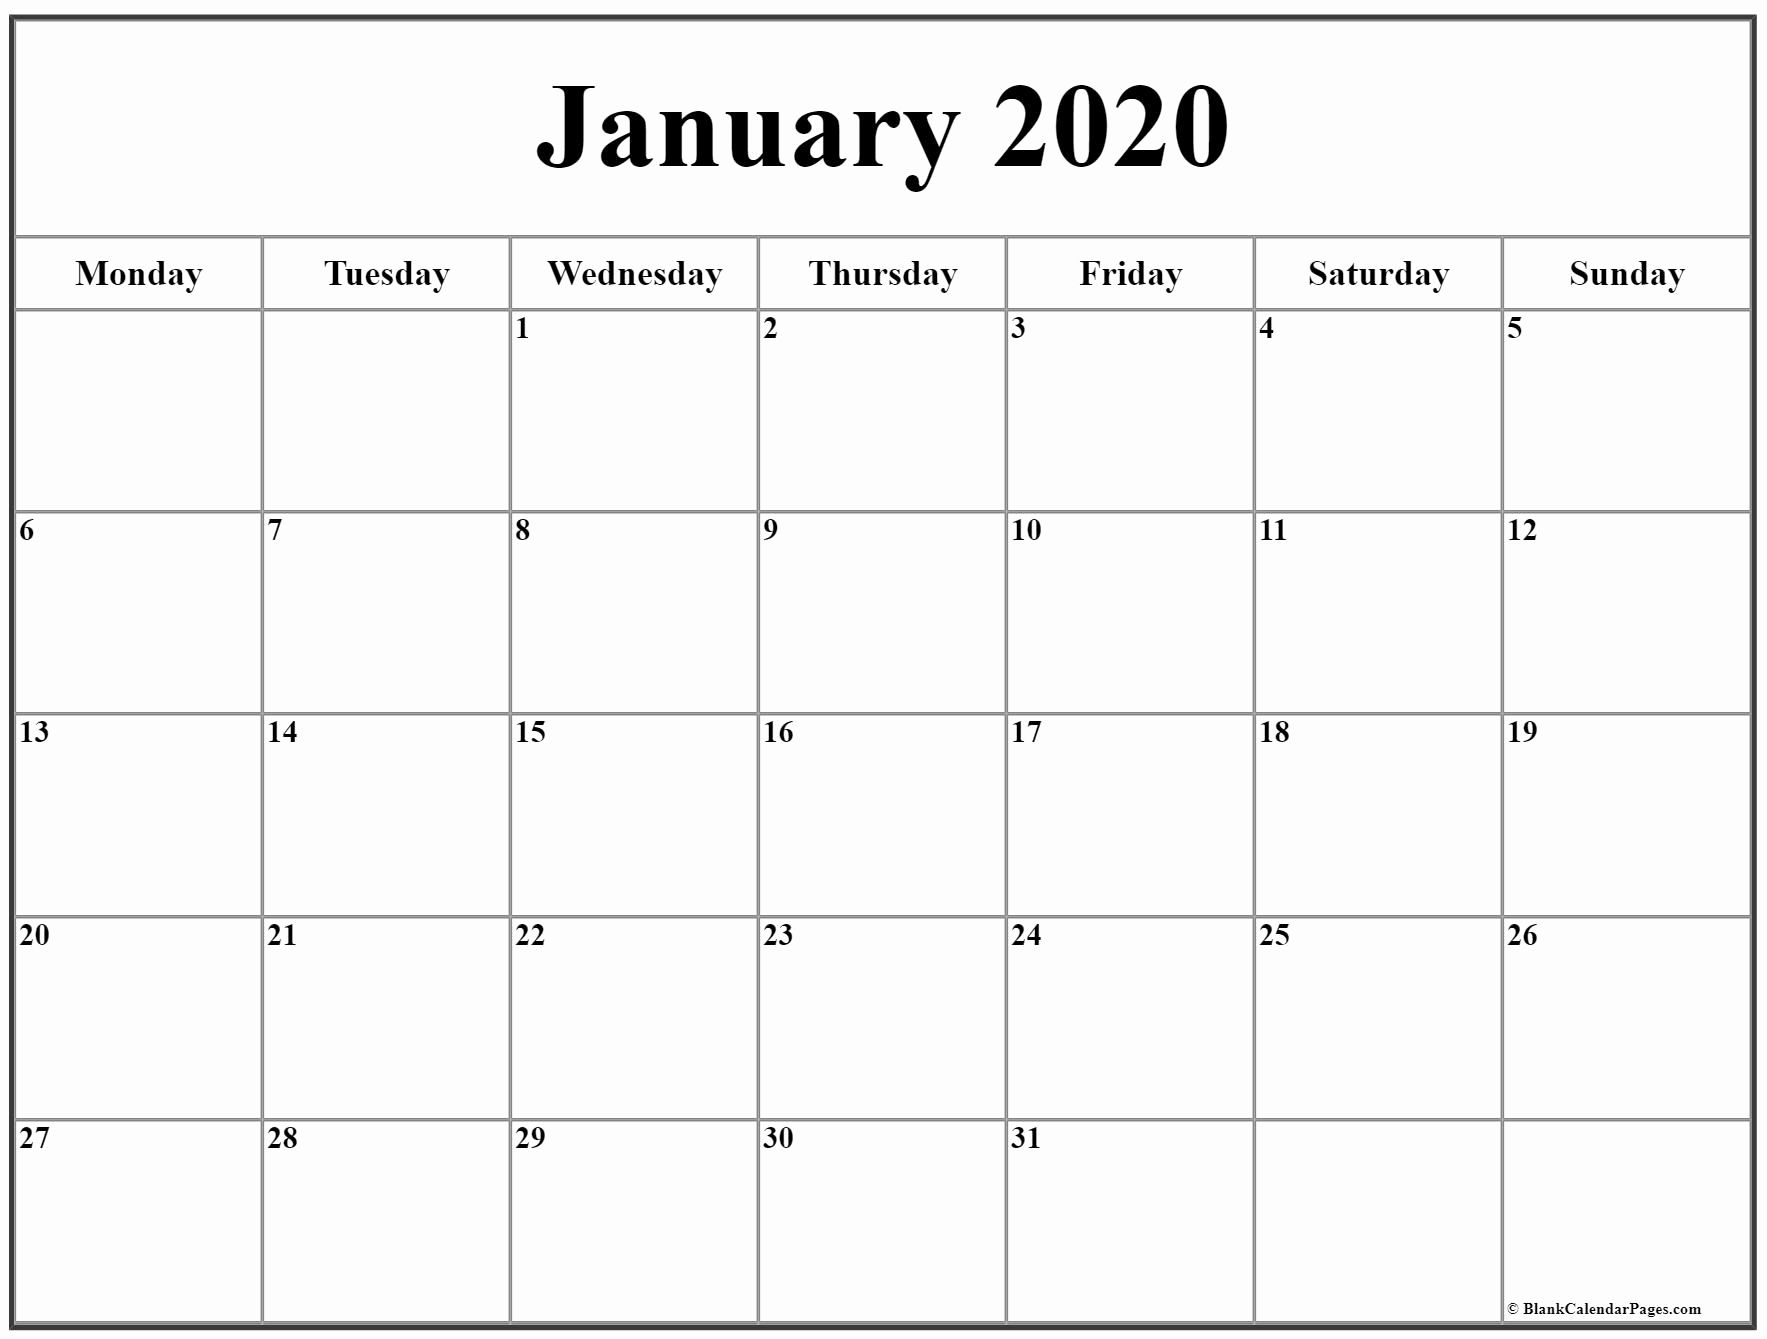 Printable Calendar Starting With Monday In 2020 | Calendar